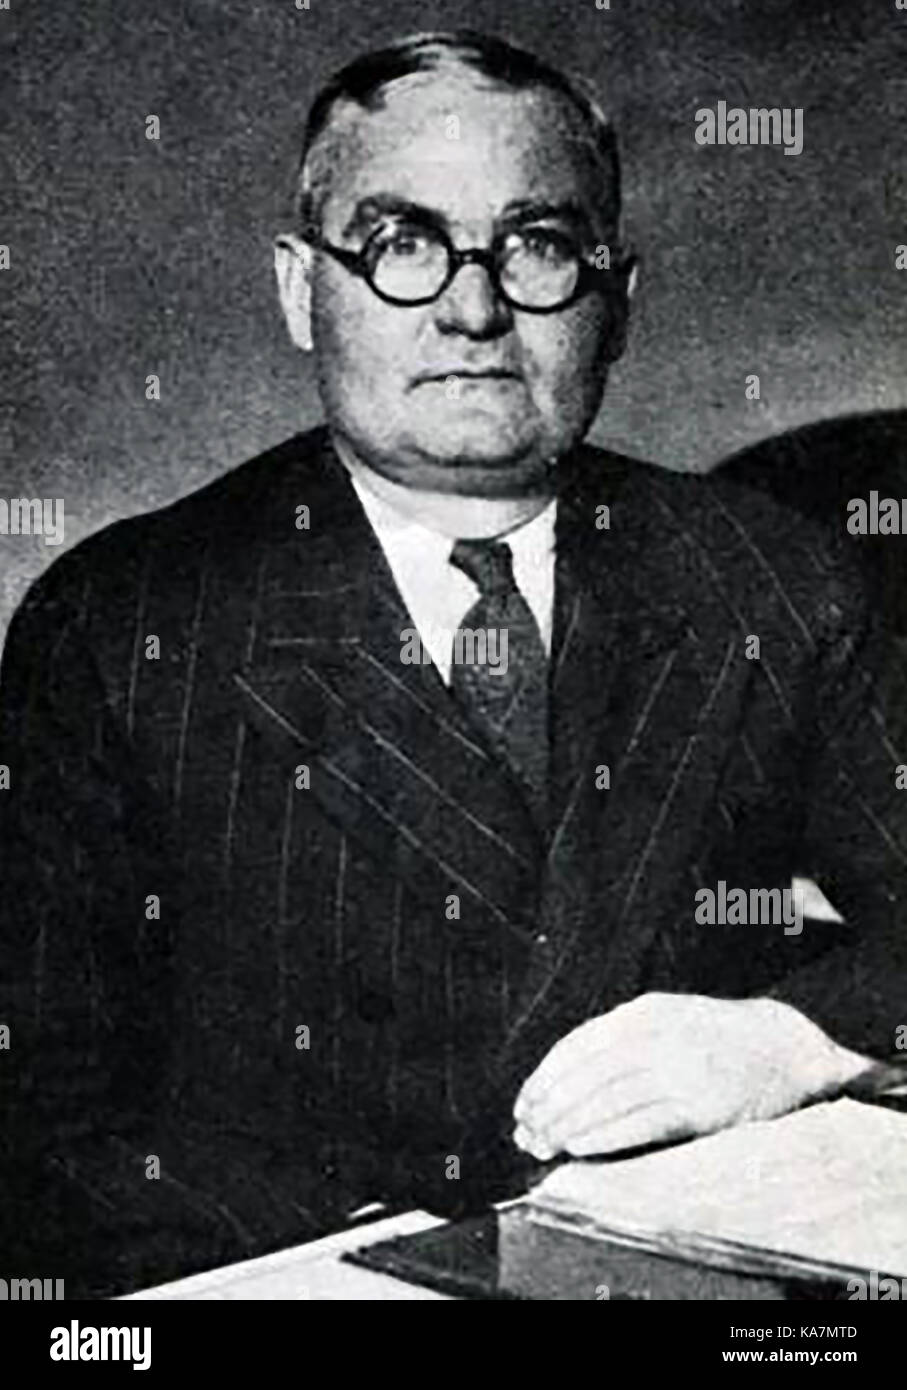 1930 - John Stege - Commissioner of Detectives, Chicago Police Department USA Stock Photo